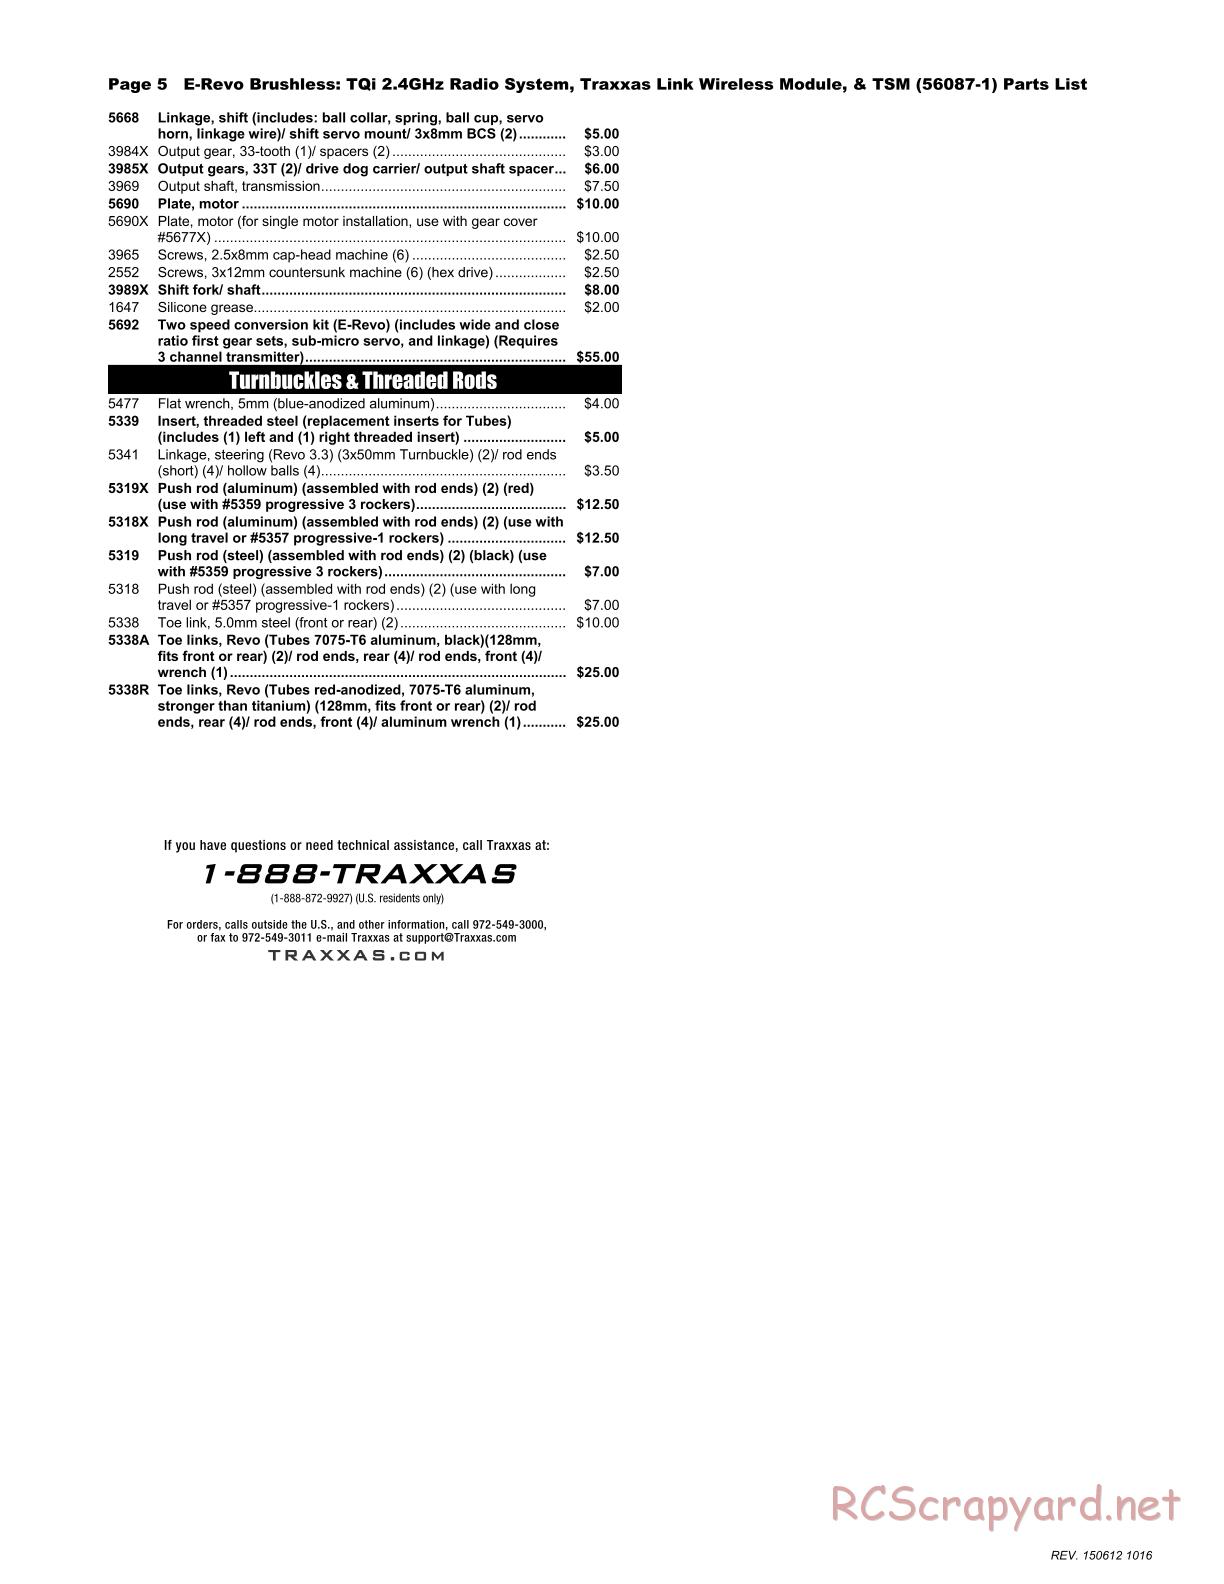 Traxxas - E-Revo Brushless TSM - Parts List - Page 5